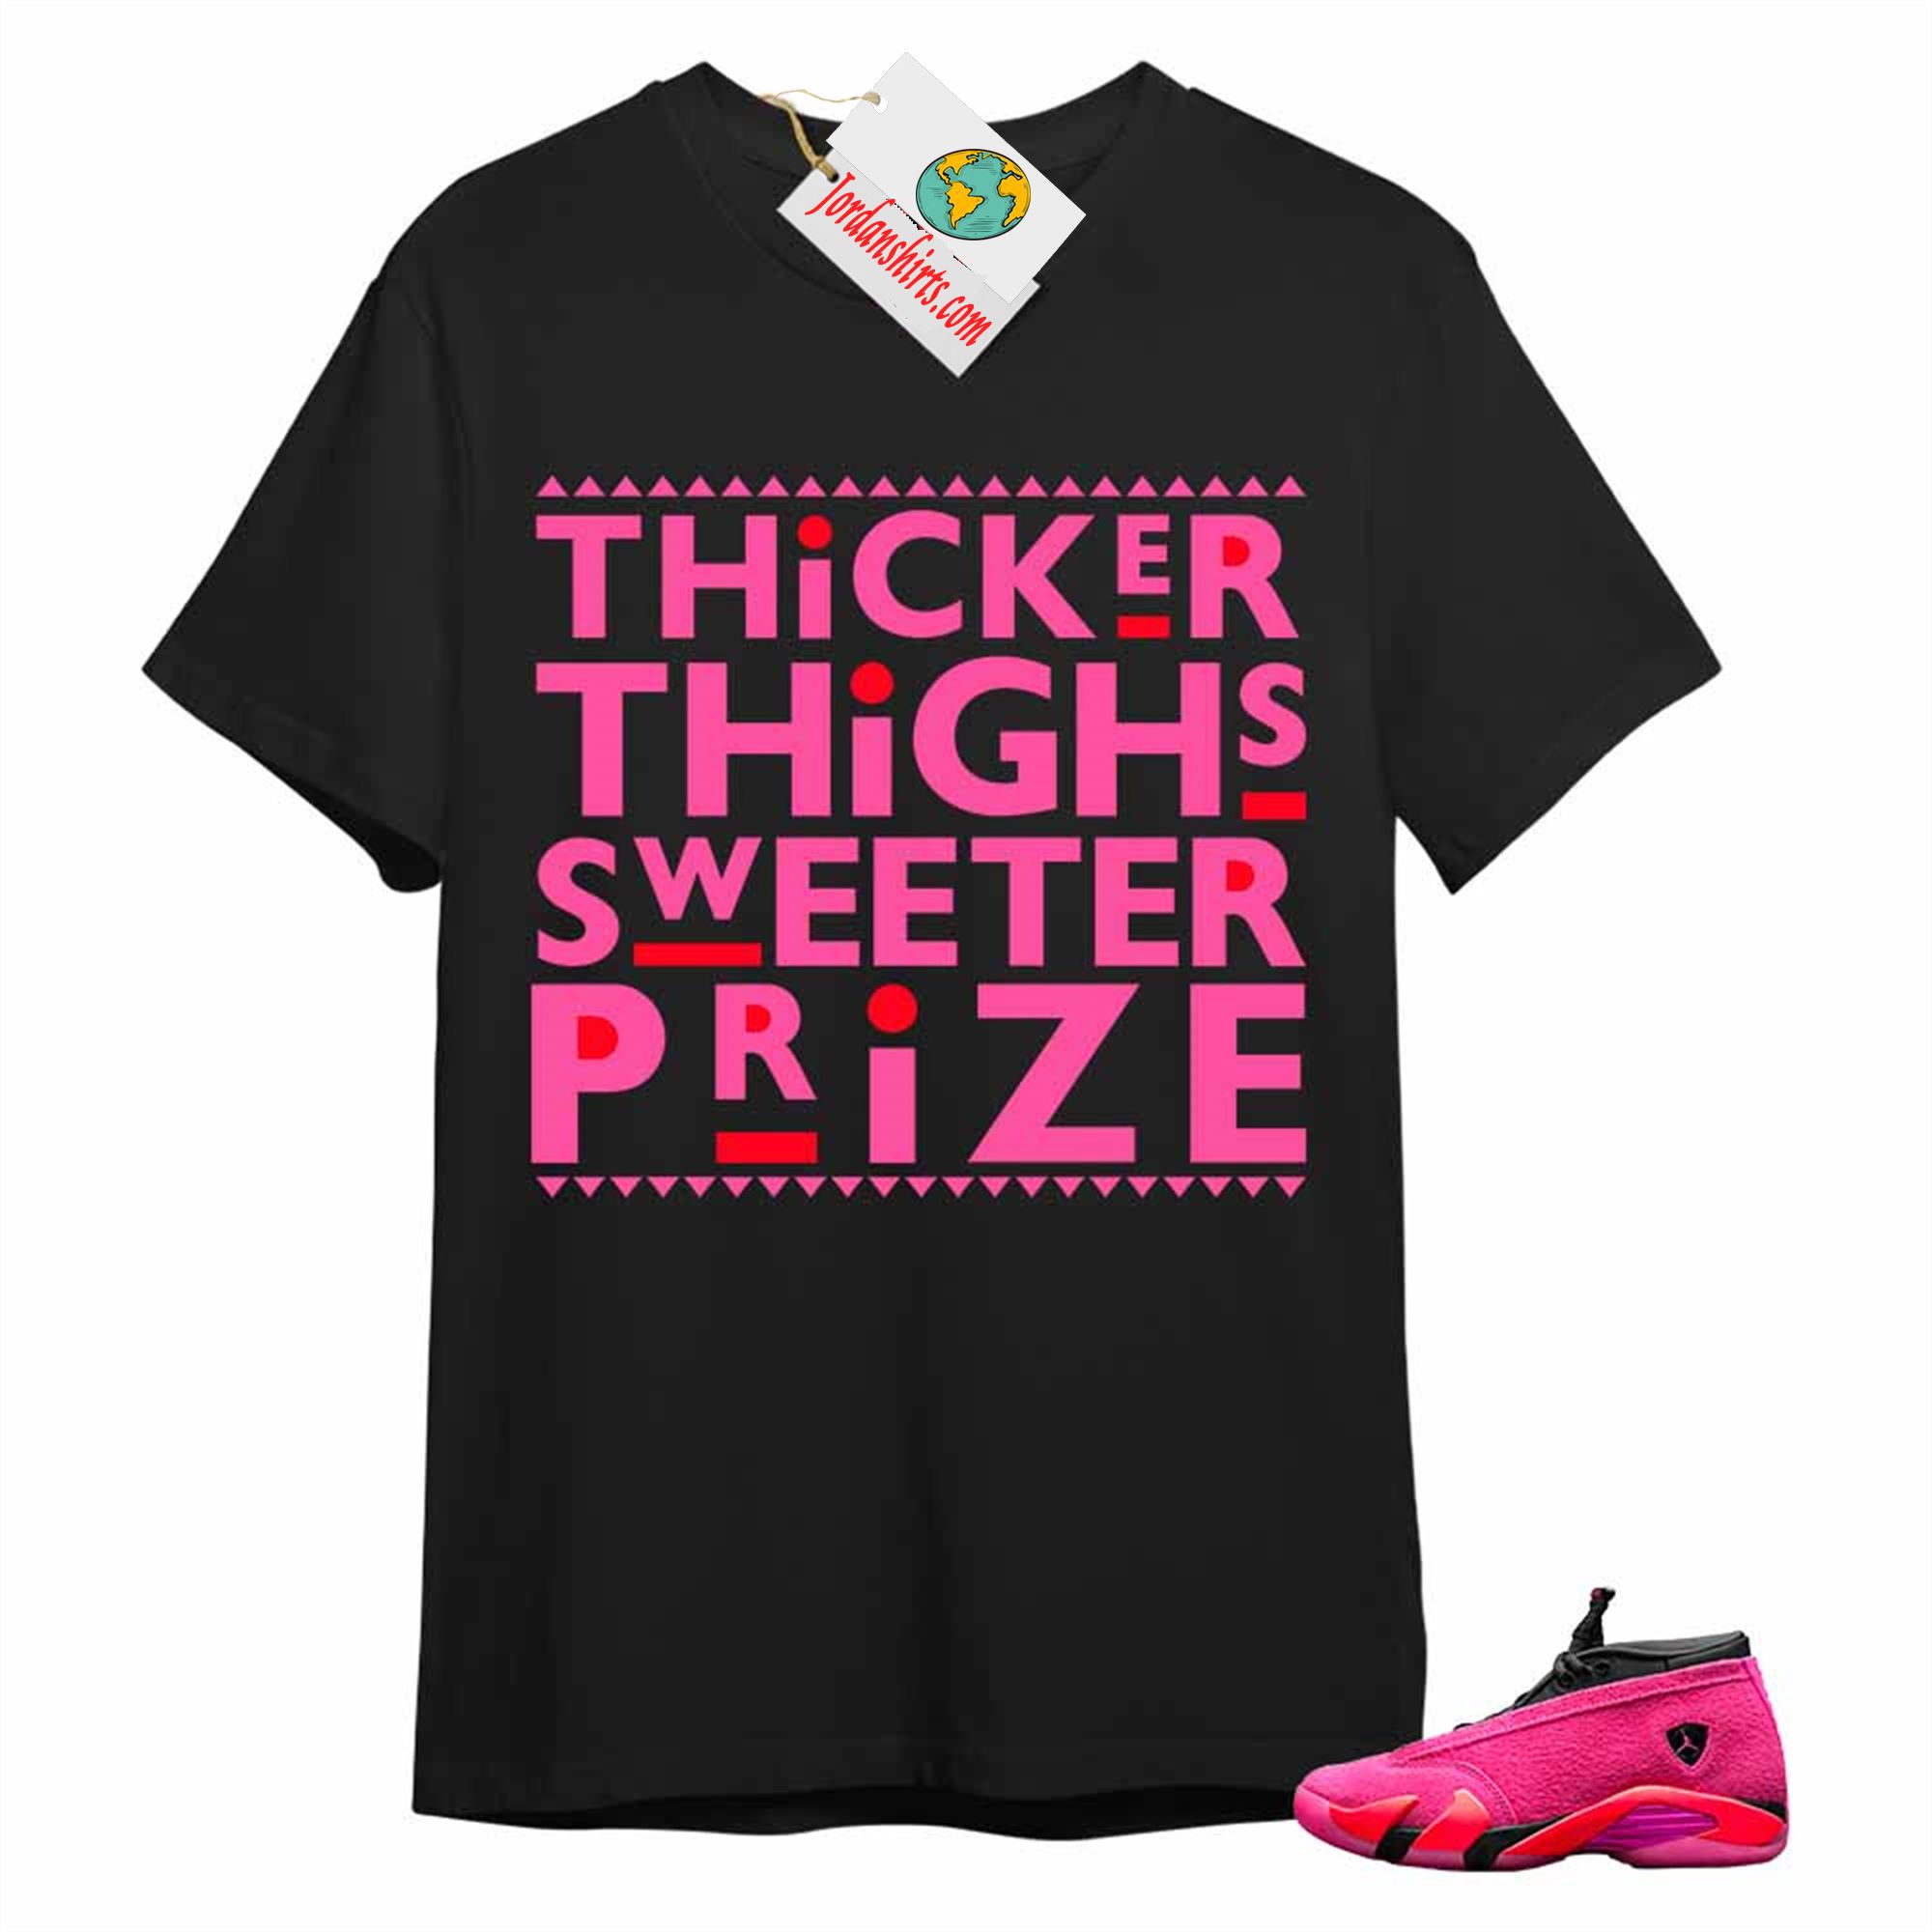 Jordan 14 Shirt, Thicker Thighs Sweeter Prize Black T-shirt Air Jordan 14 Wmns Shocking Pink 14s Size Up To 5xl